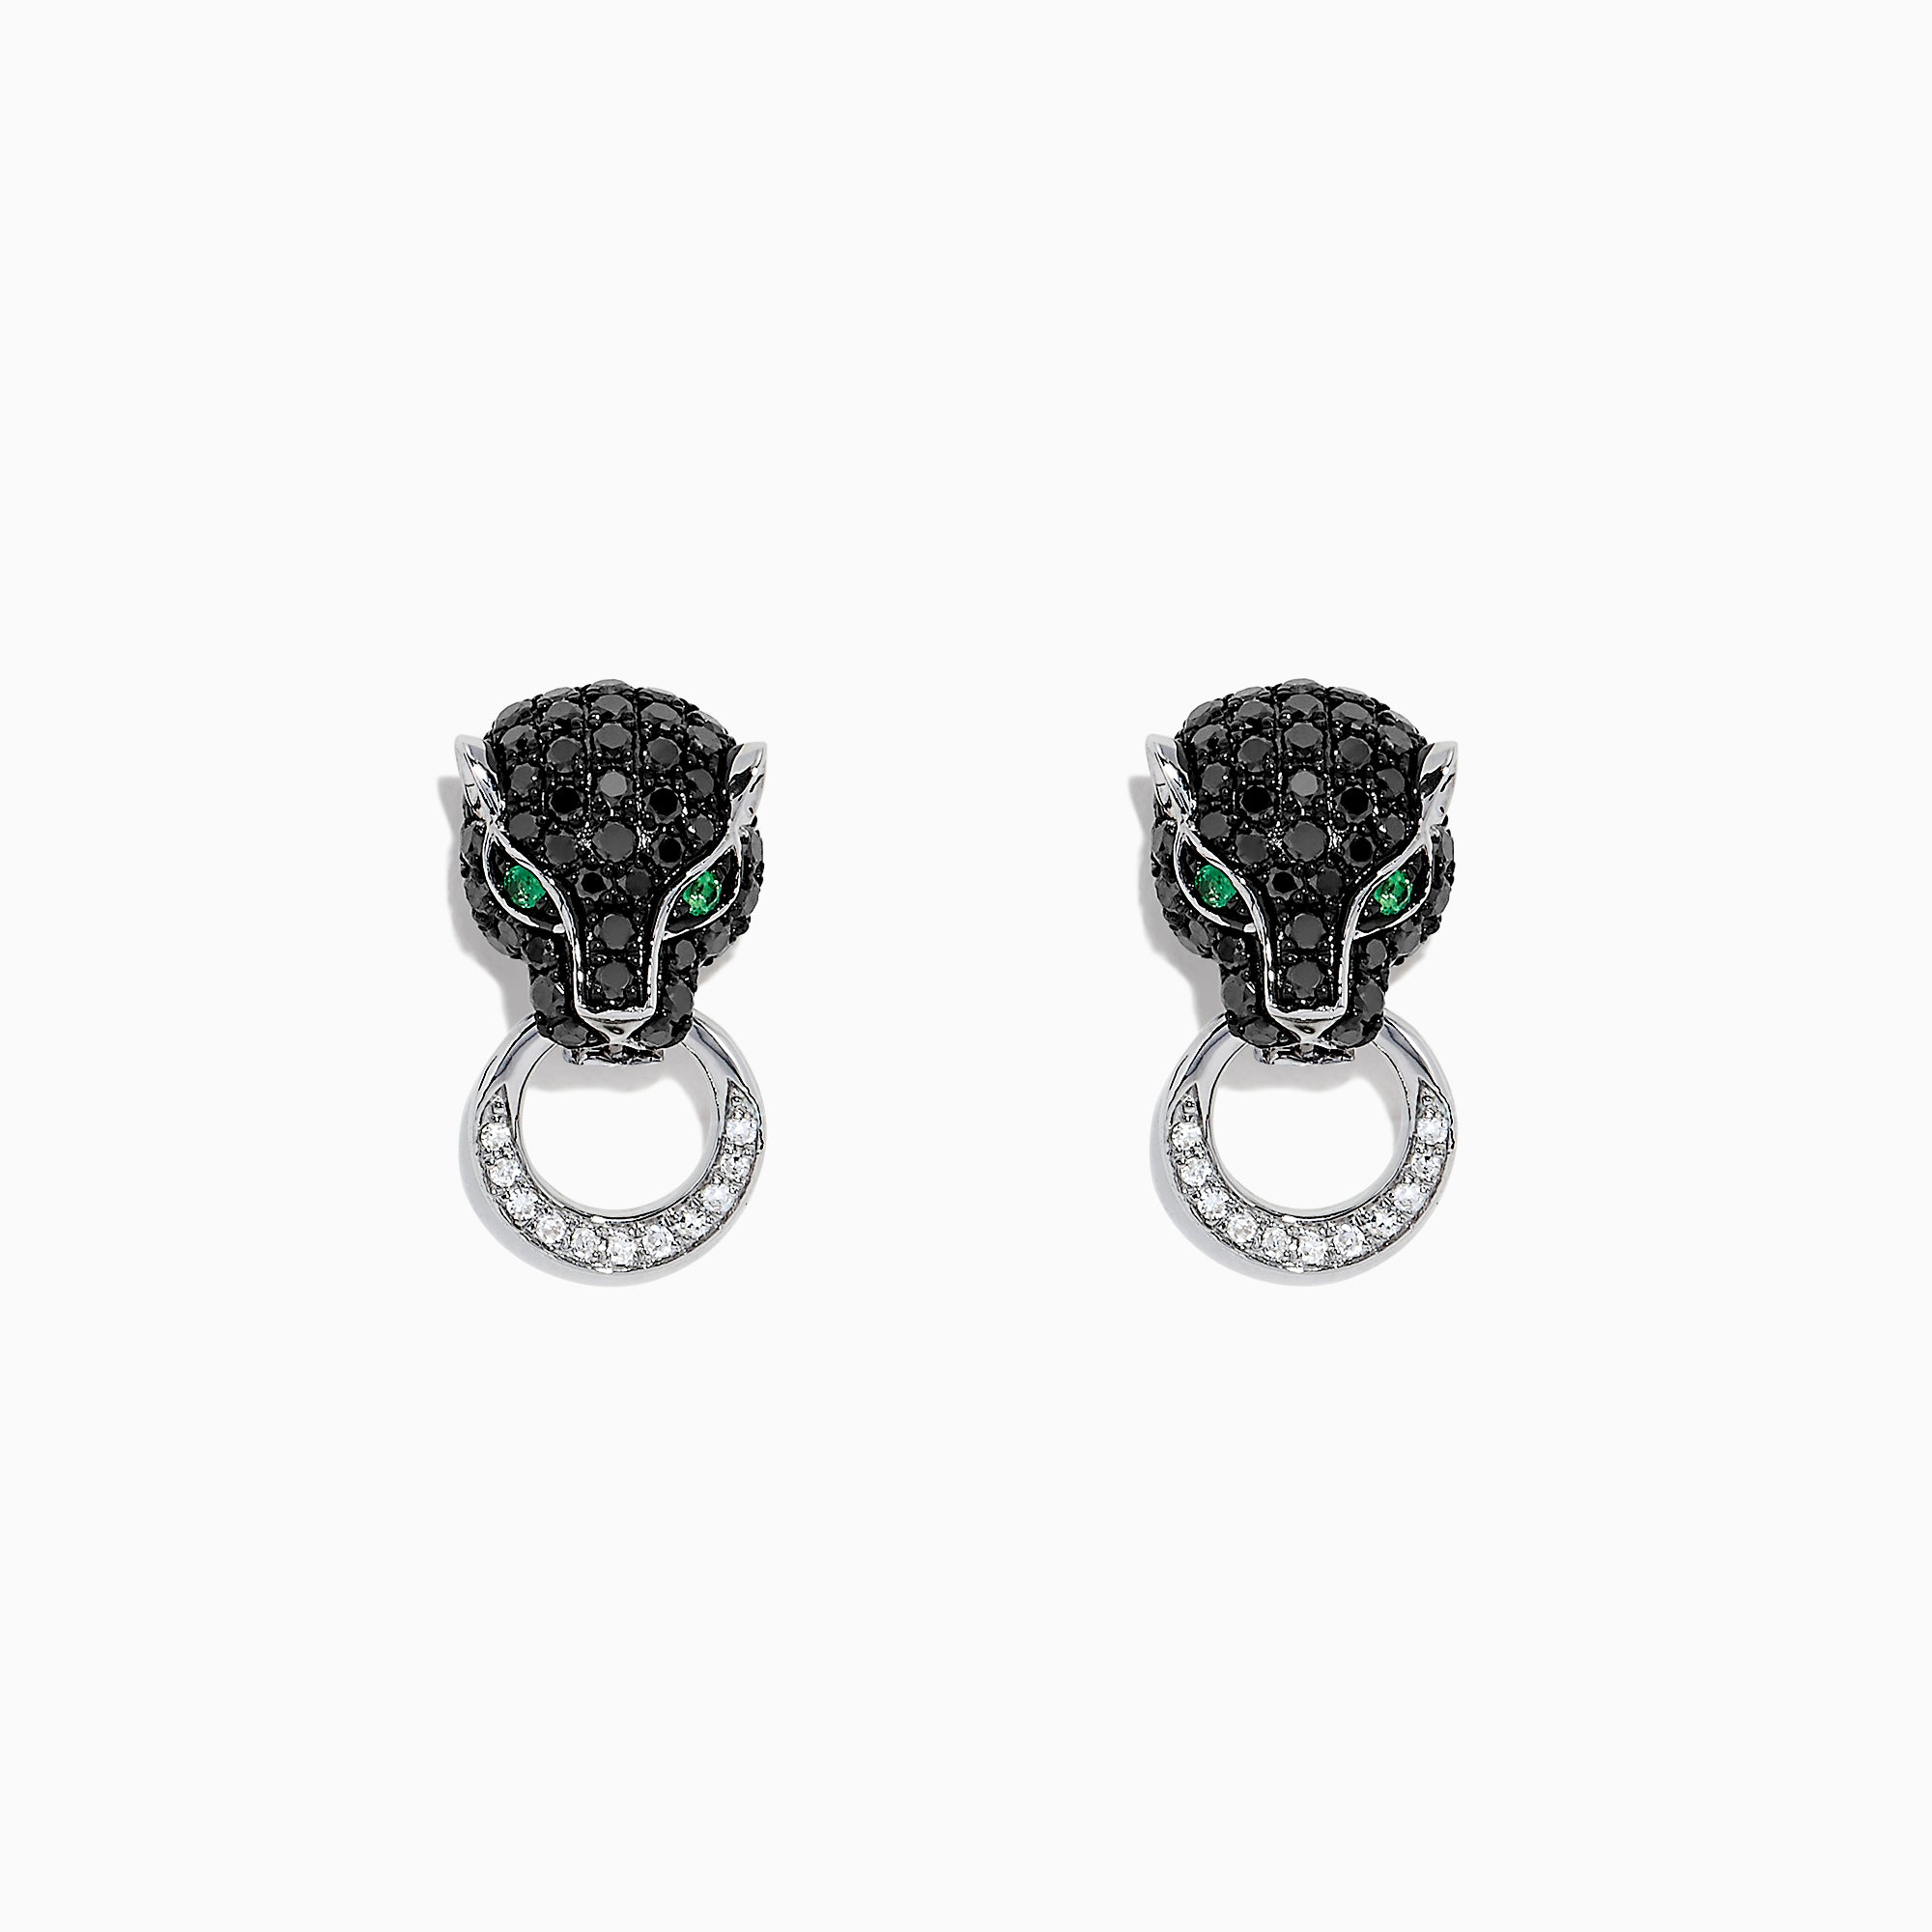 Effy Signature 14K White Gold Black Diamond & Emerald Earrings, 0.84 TCW